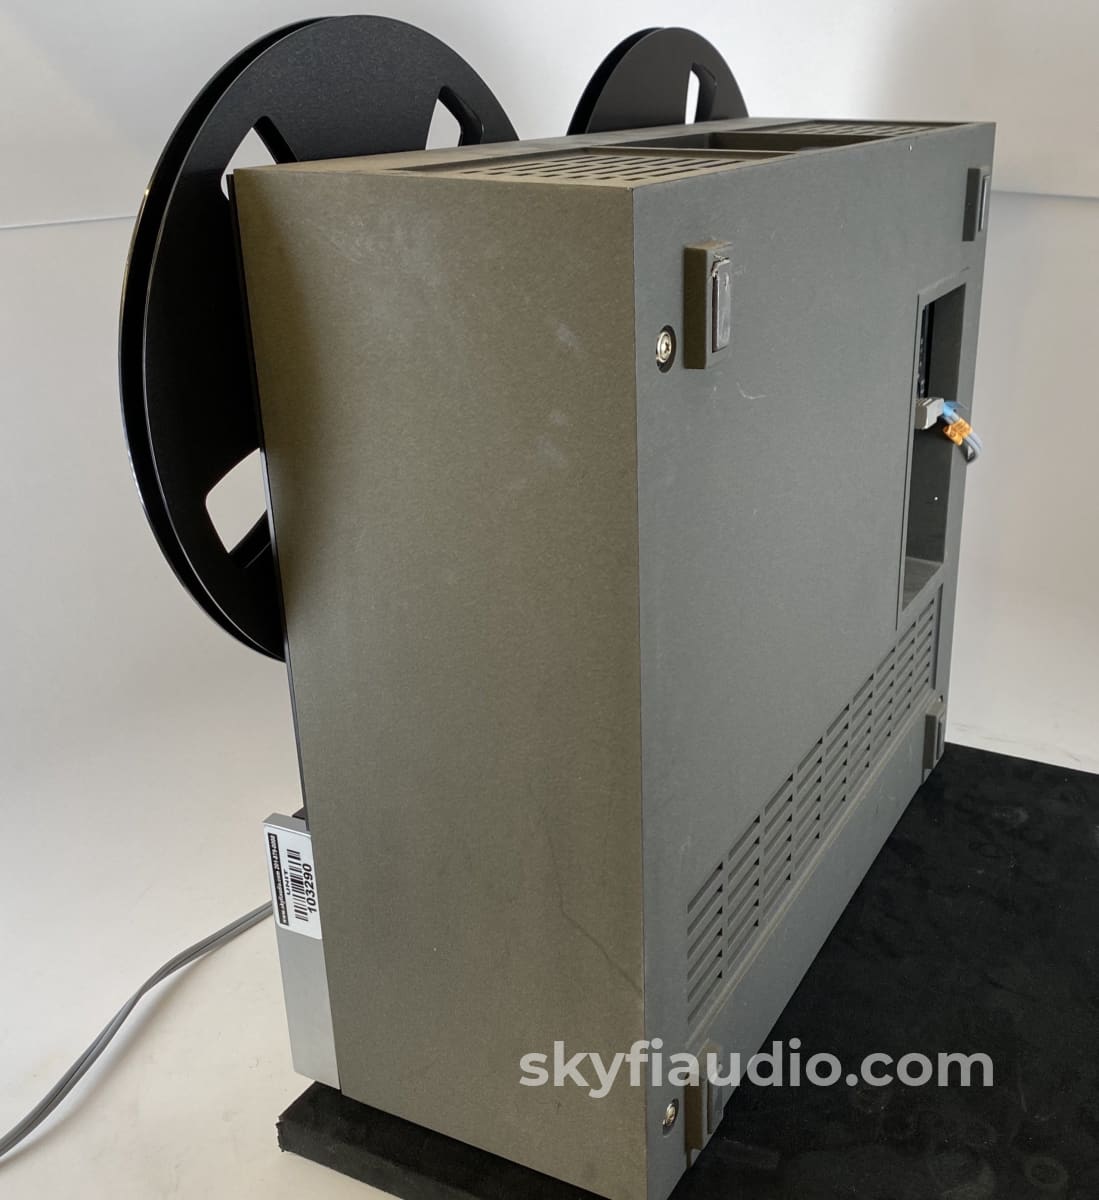 ReVox B77 MKII Stereo Tape Recorder Reel to Reel Player